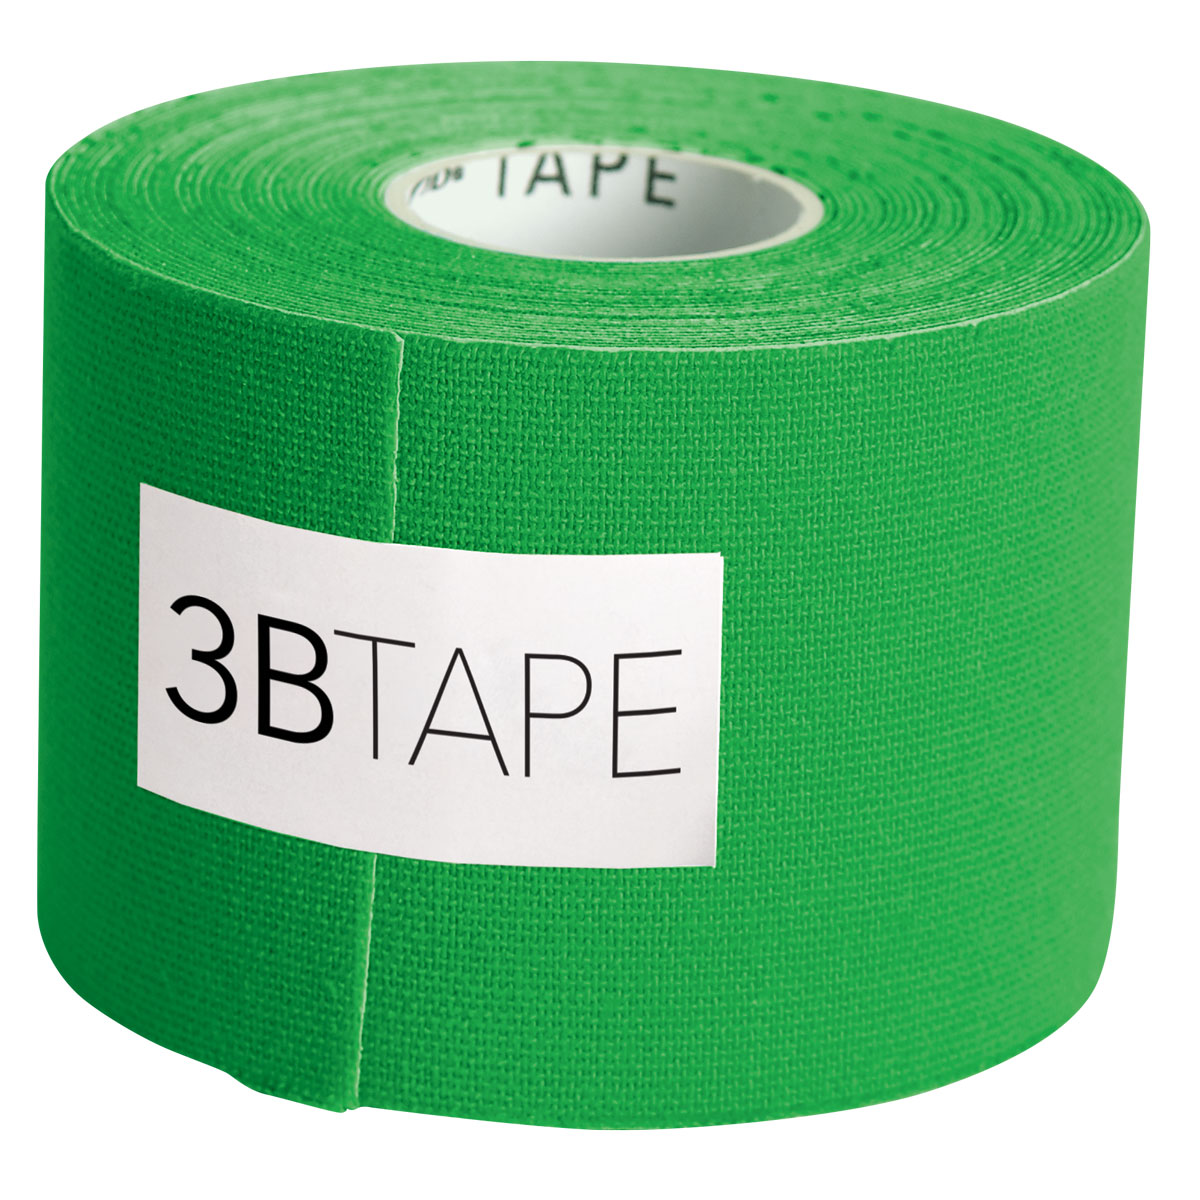 3BTAPE ELITE – kinesiology tape – blue, 16' x 2” roll - 1018892 - 3B  Scientific - S-3BTEBL - Kinesiology Tape, Kinesio Tape